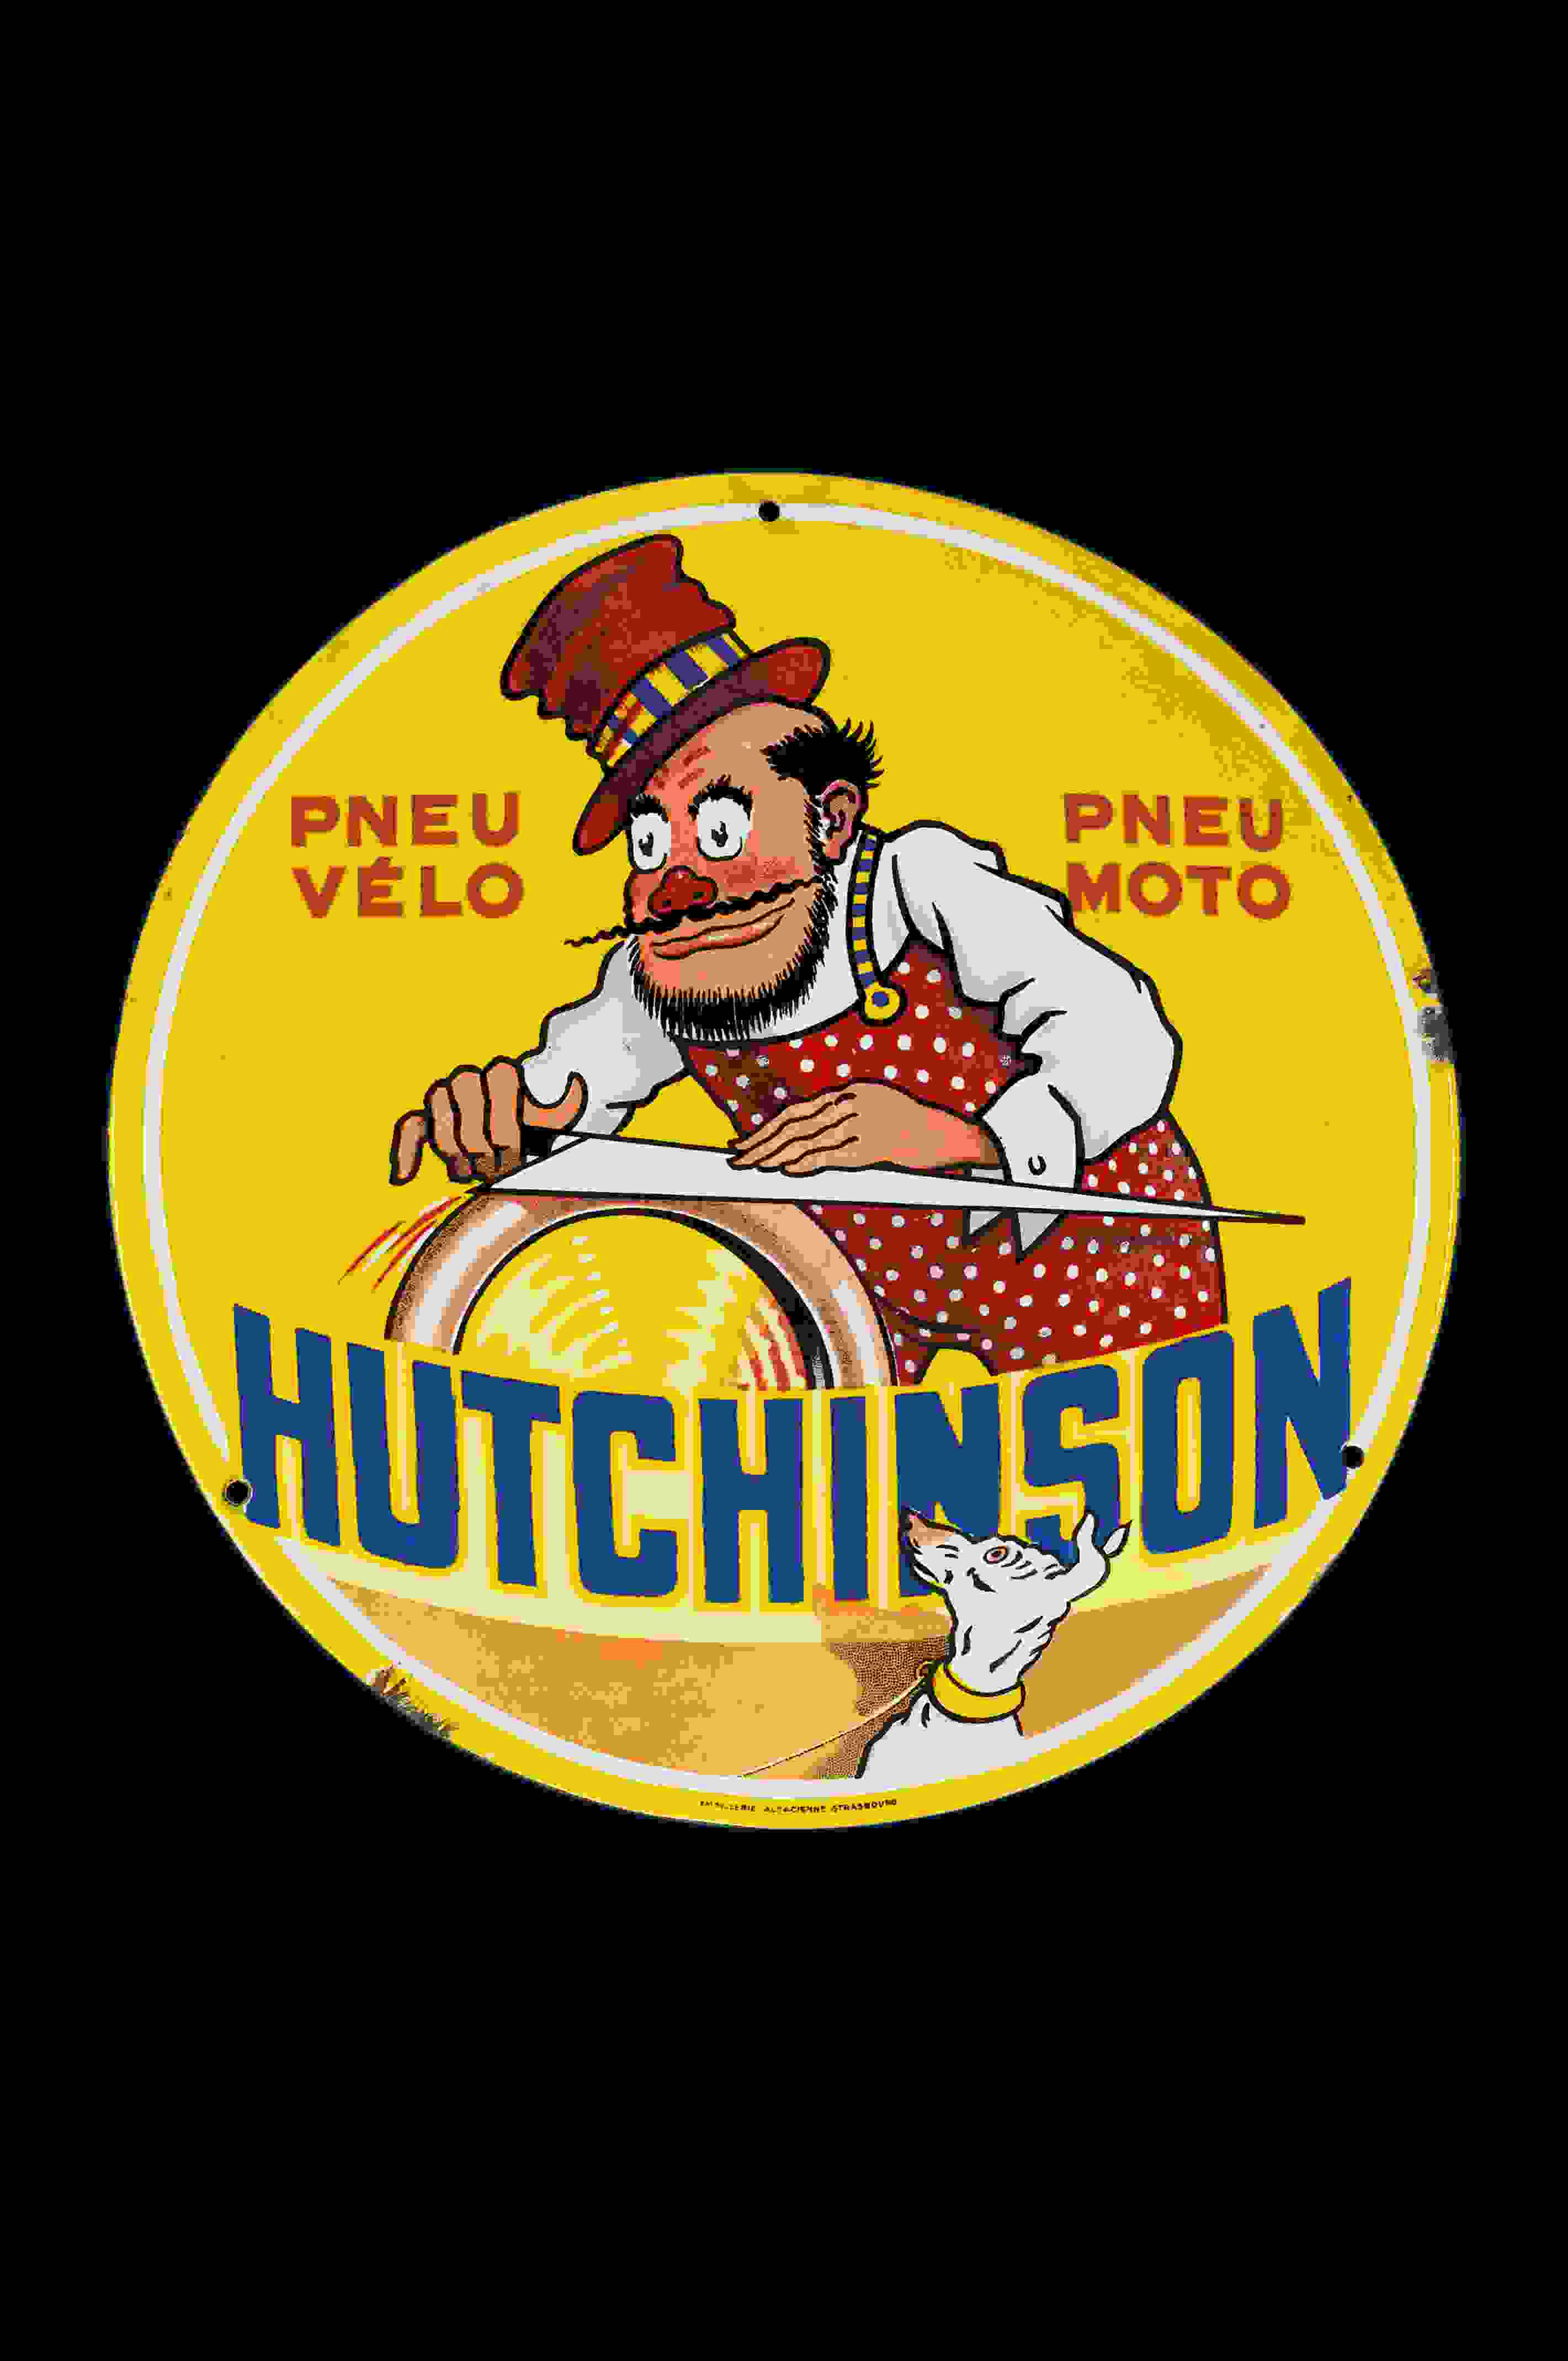 Hutchinson Pneu 